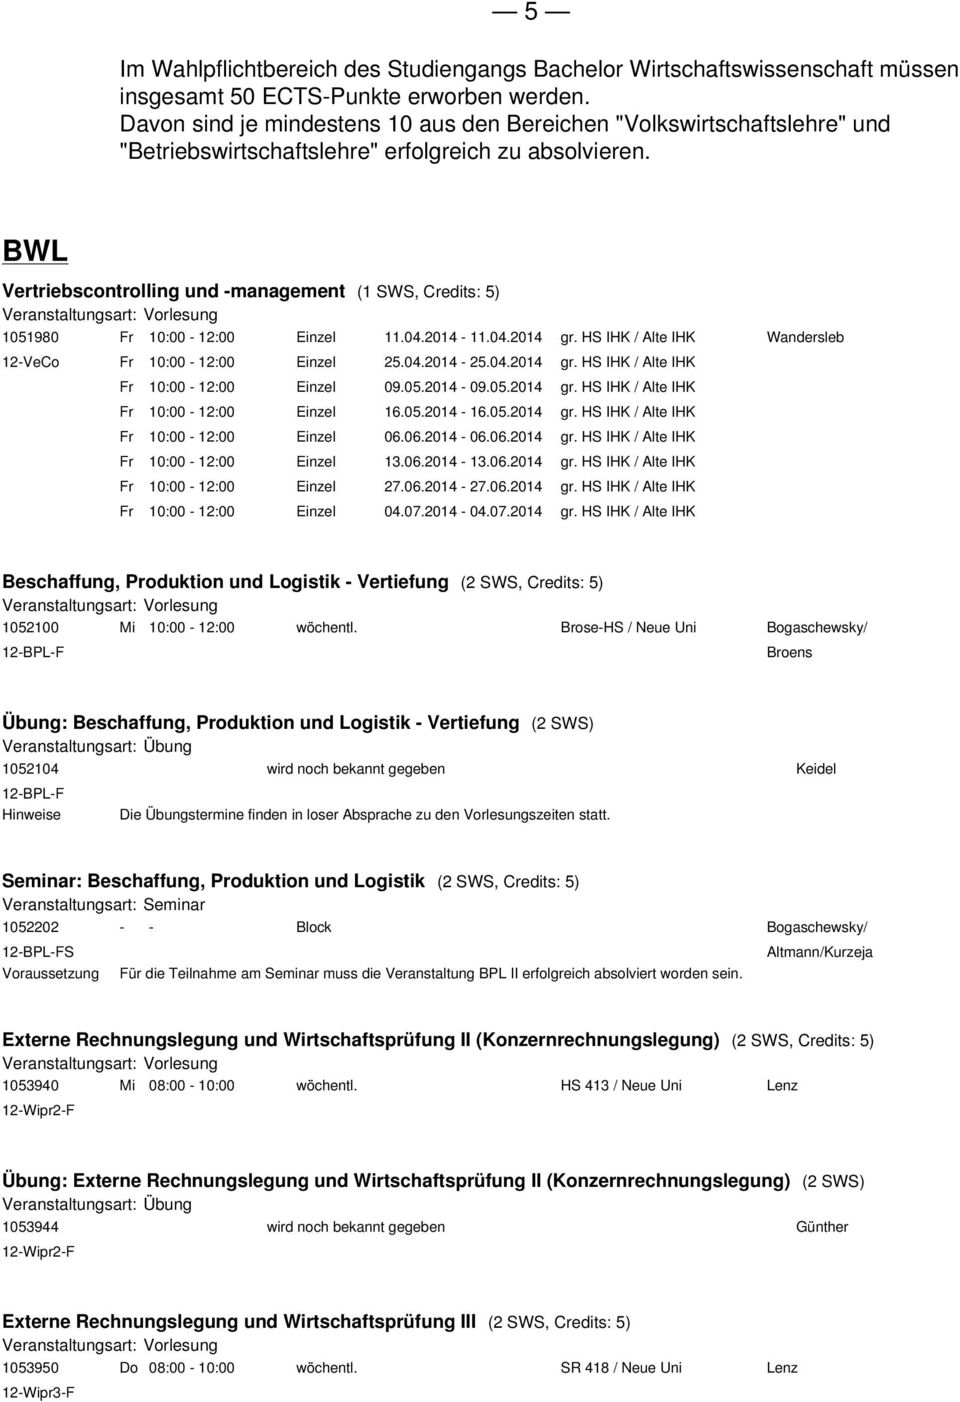 BWL Vertriebscontrolling und -management (1 SWS, Credits: 5) 1051980 12-VeCo 10:00-12:00 10:00-12:00 10:00-12:00 10:00-12:00 10:00-12:00 10:00-12:00 10:00-12:00 10:00-12:00 11.04.2014-11.04.2014 25.